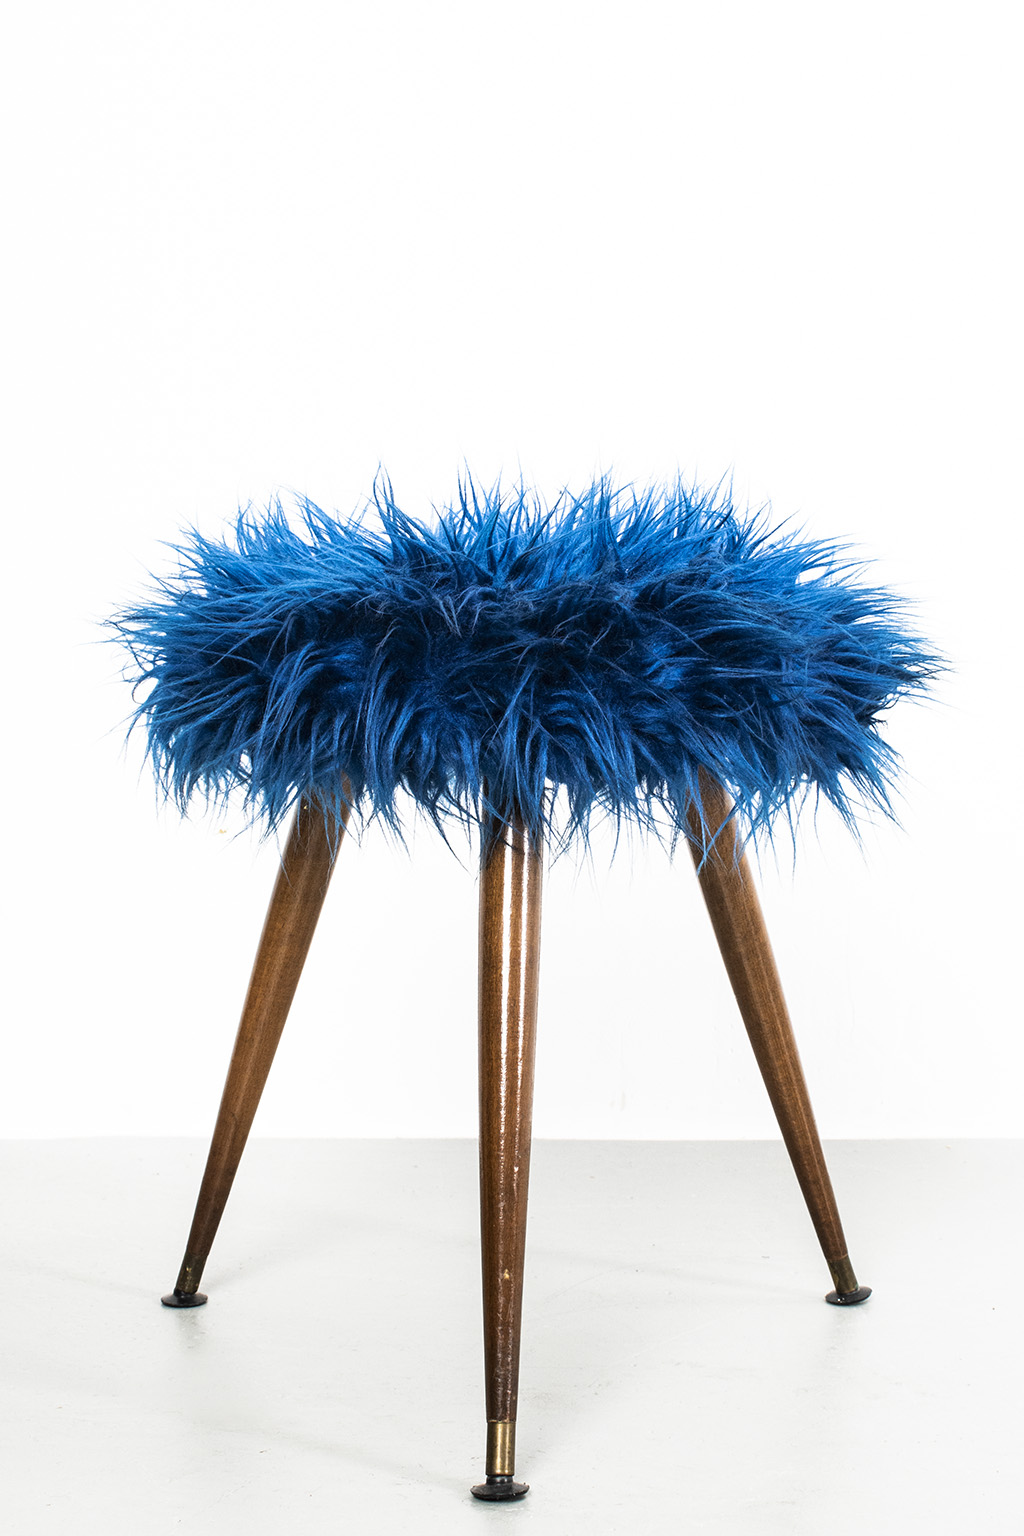 Fluffy blue stool on wooden legs